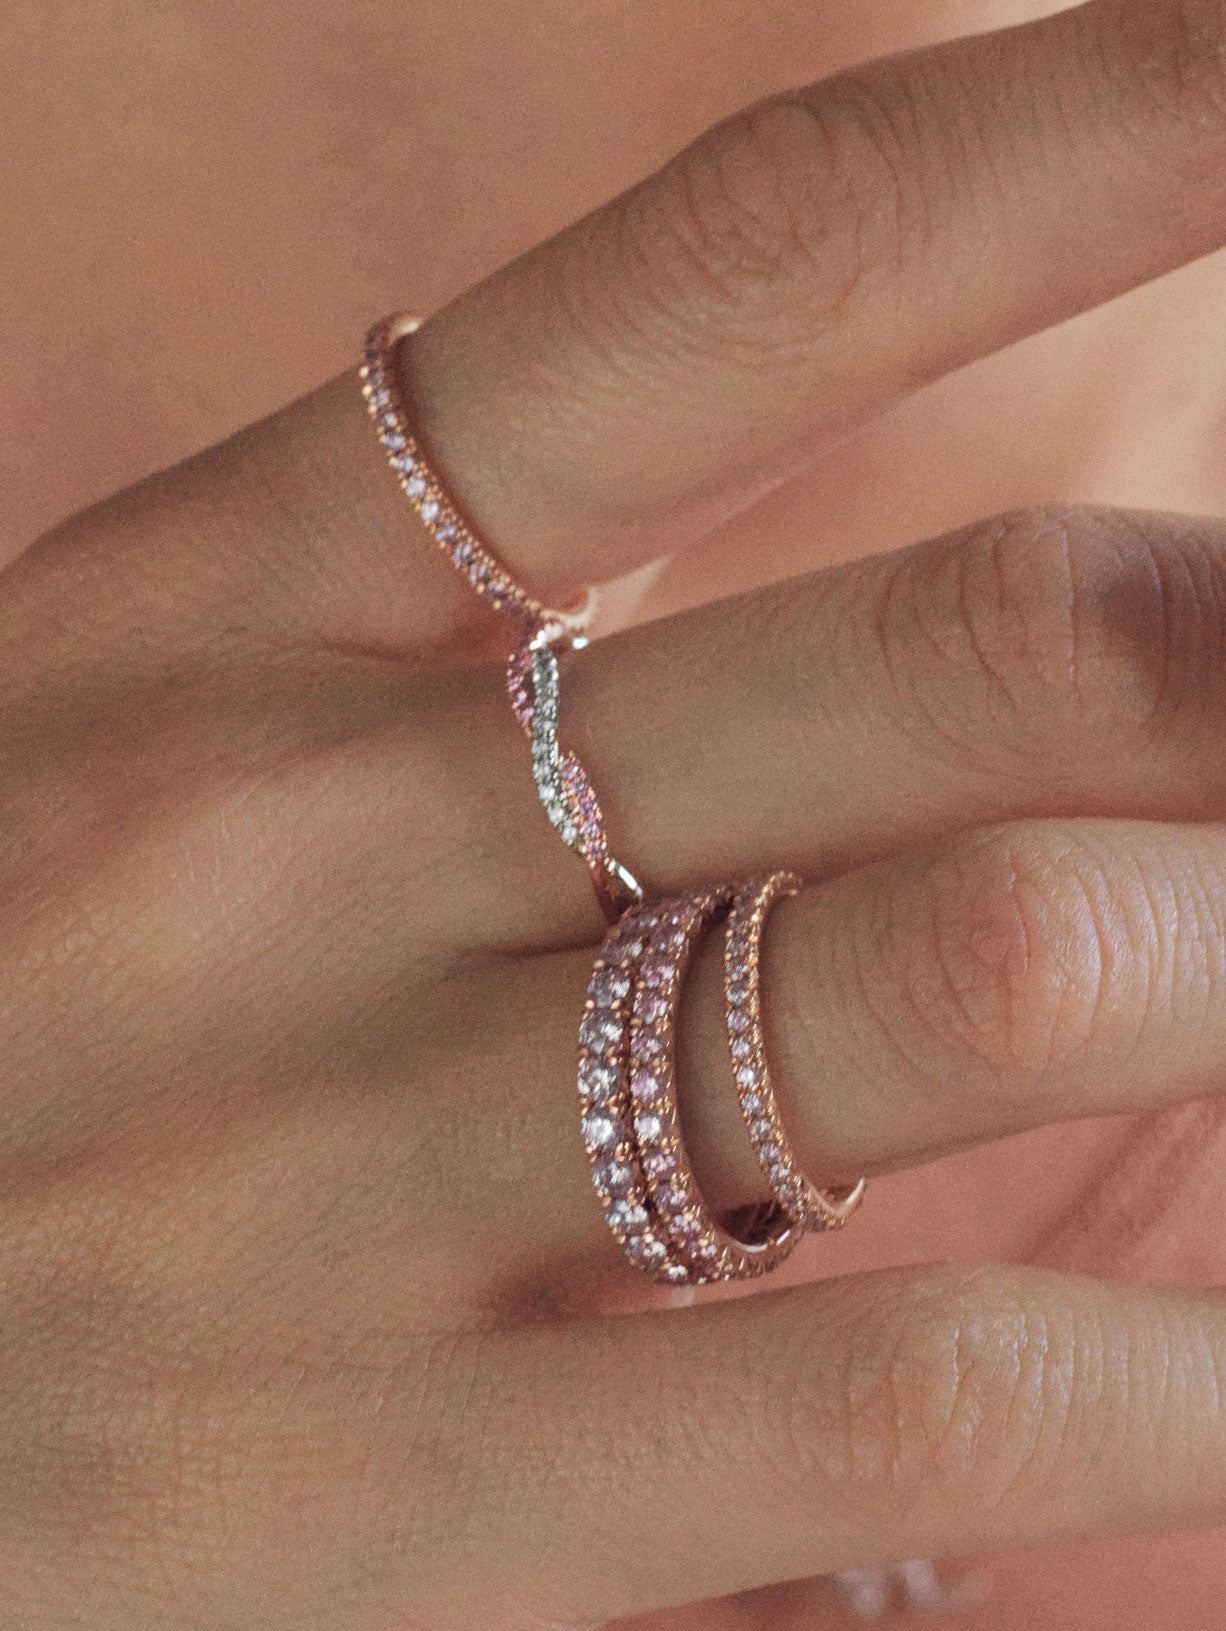 Argyle Pink™ Diamond French Pave Half Eternity Band 0.18ctw - Pink Diamonds, J FINE - J Fine, ring - Pink Diamond Jewelry, j-fine-french-pave-half-eternity-band - Argyle Pink Diamonds